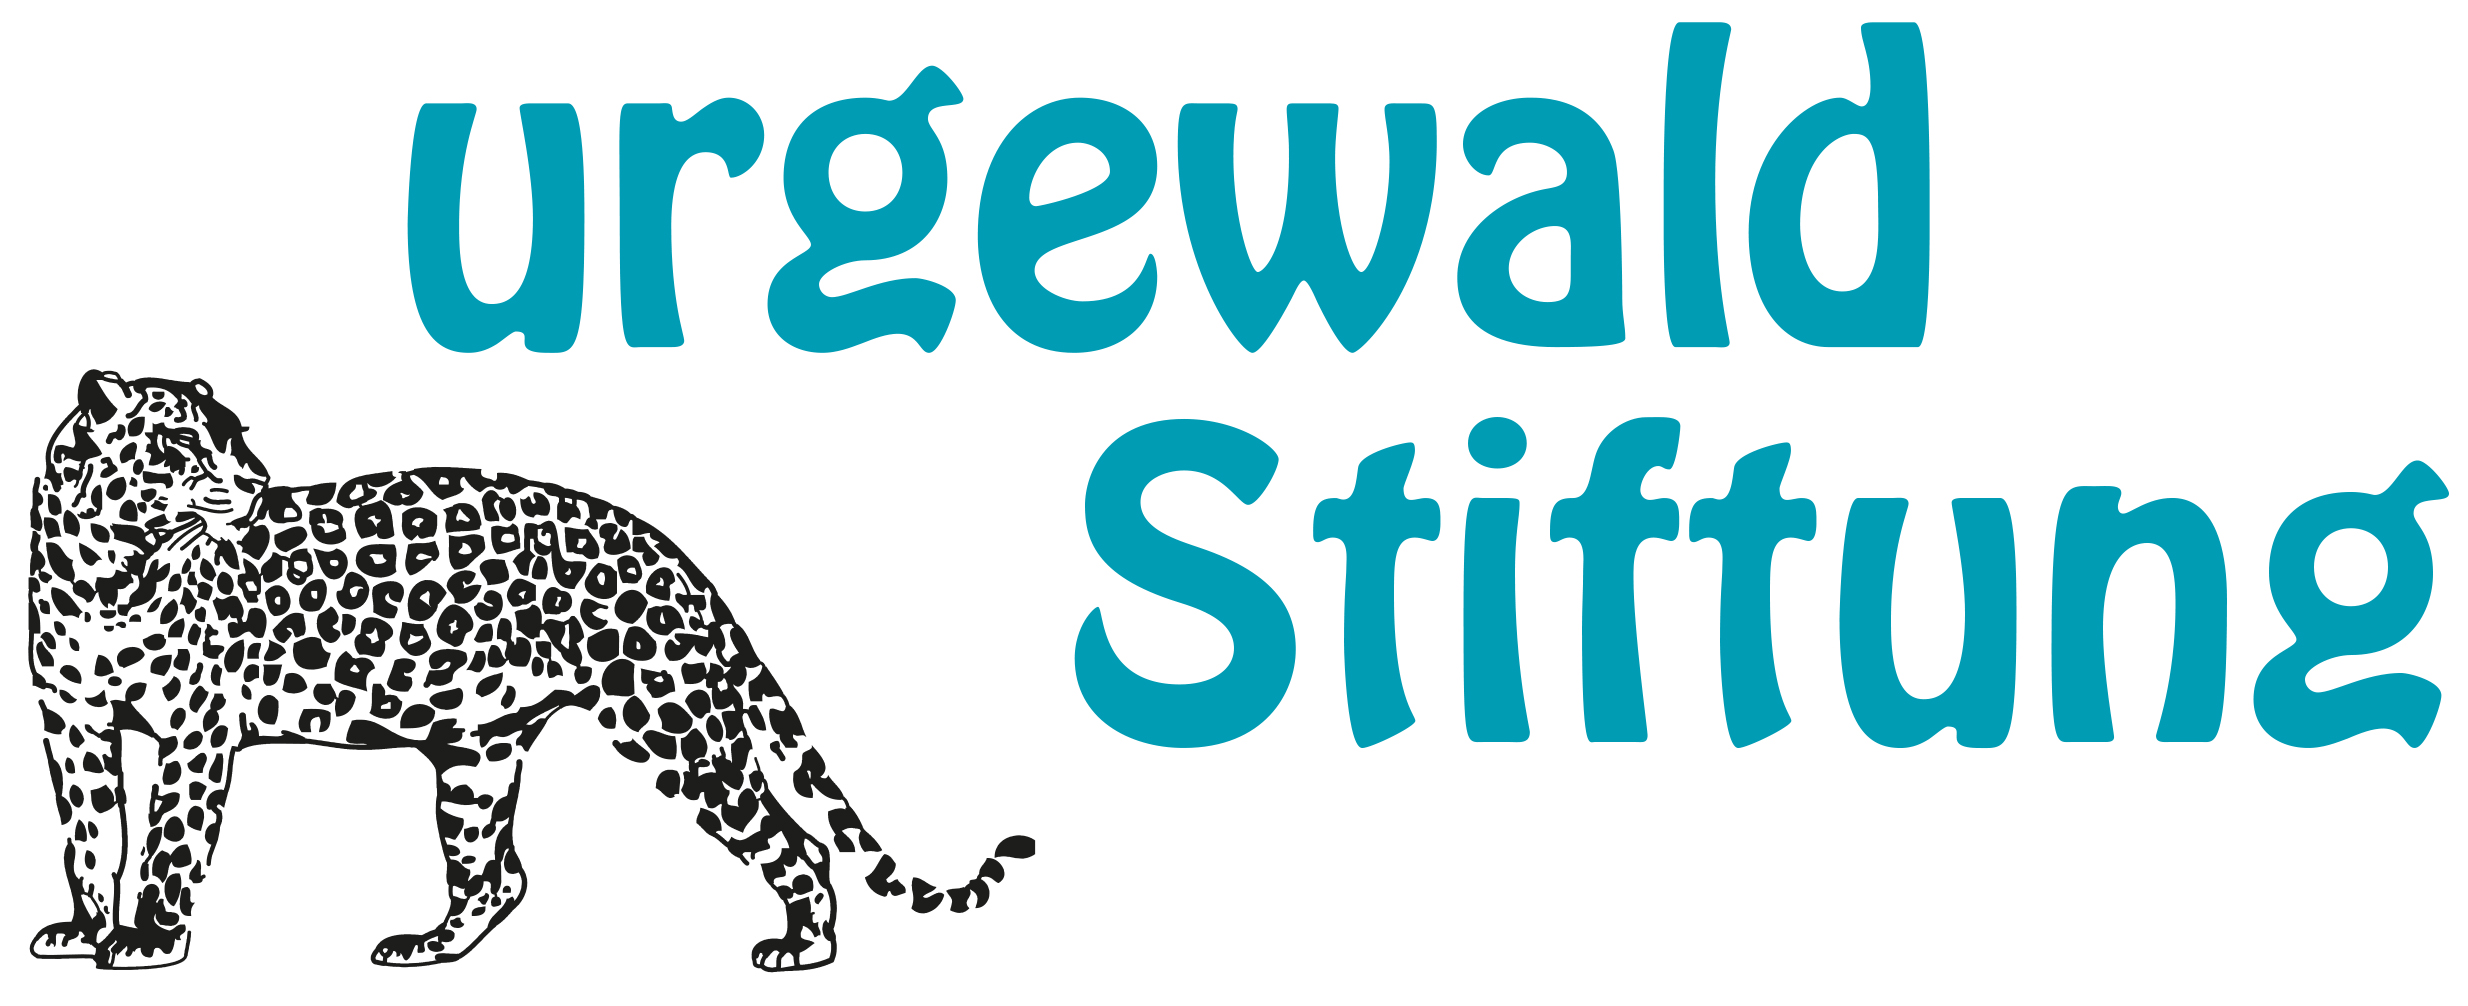 urgewald Stiftung Logo